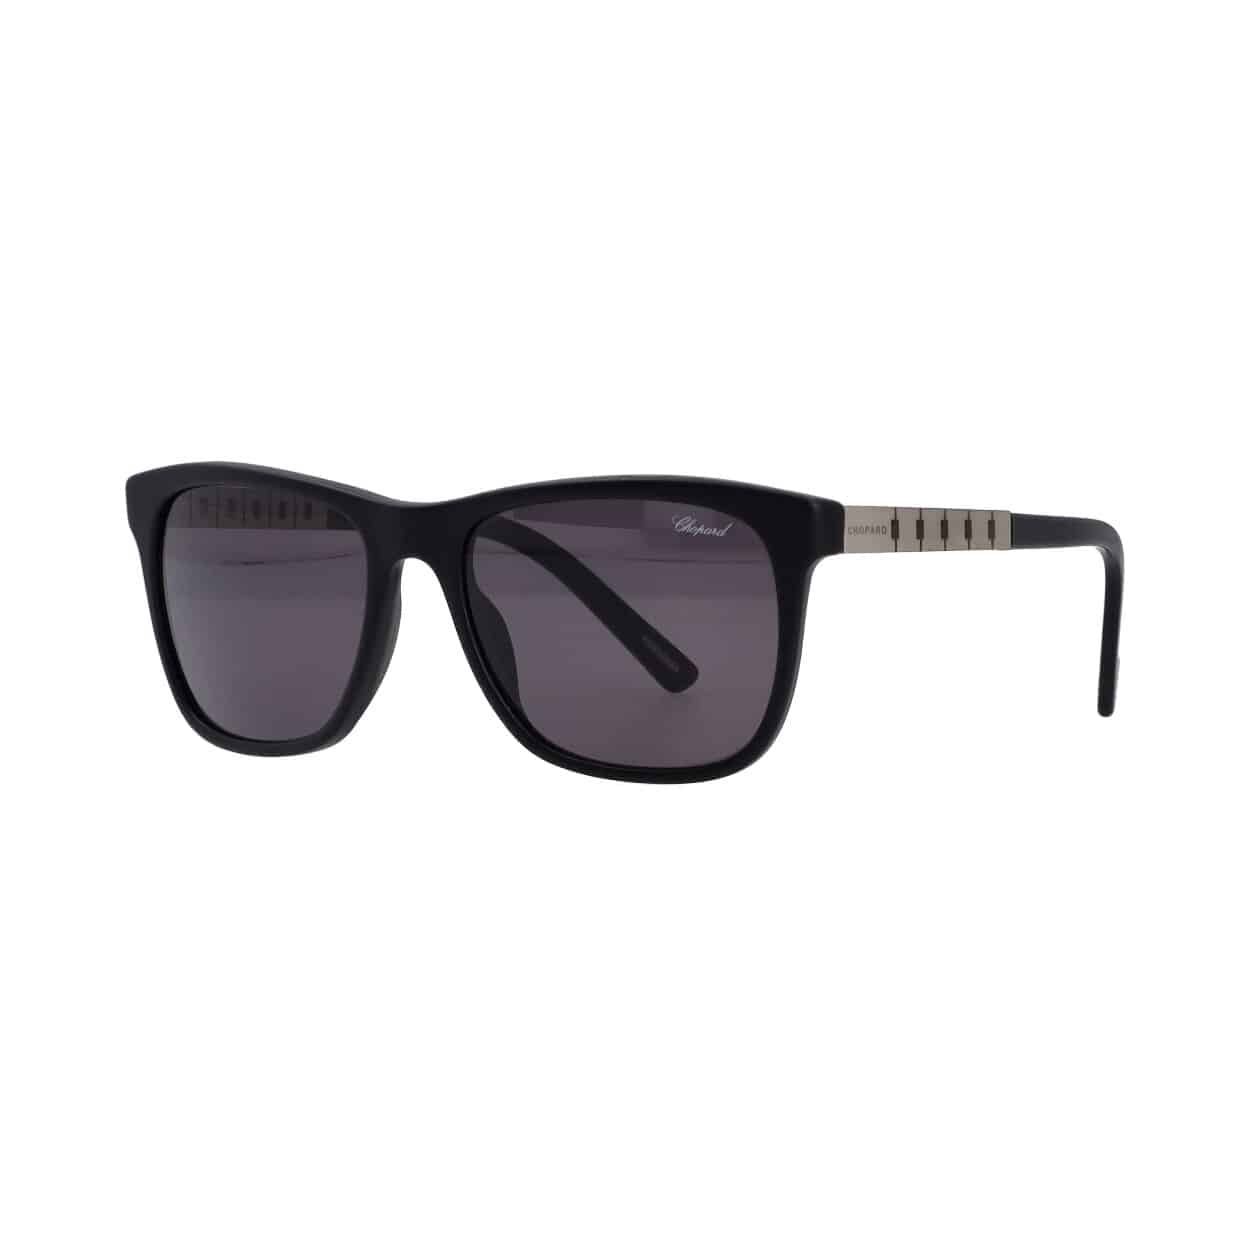 CHOPARD Polarized Sunglasses SCH 152 Black | Luxity